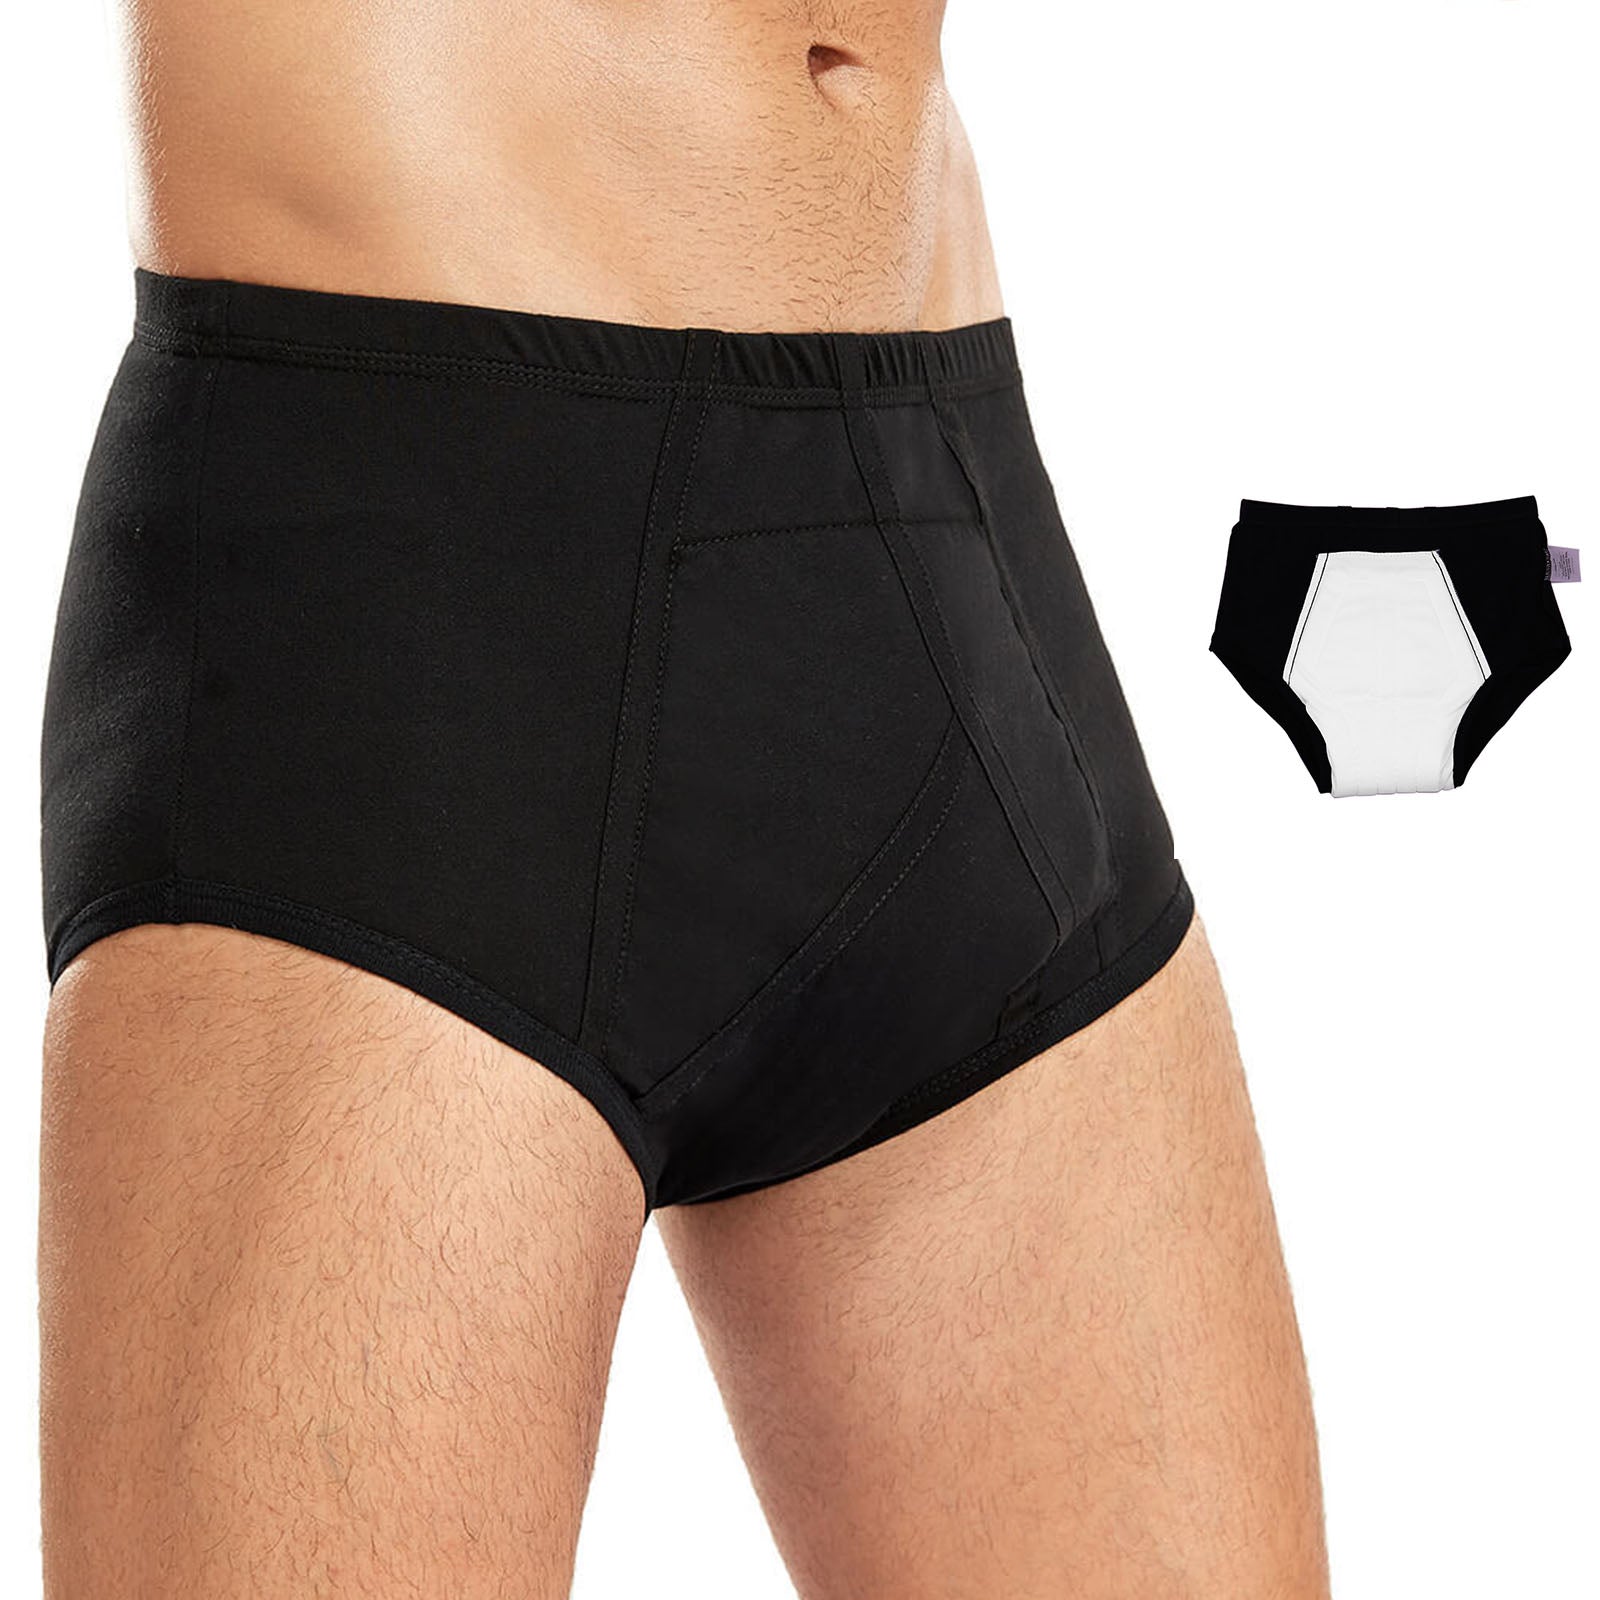 Mens Incontinence Briefs,Mens Incontinence Underwear Cotton Washable  Reusable Incontinence Underwear for Men L